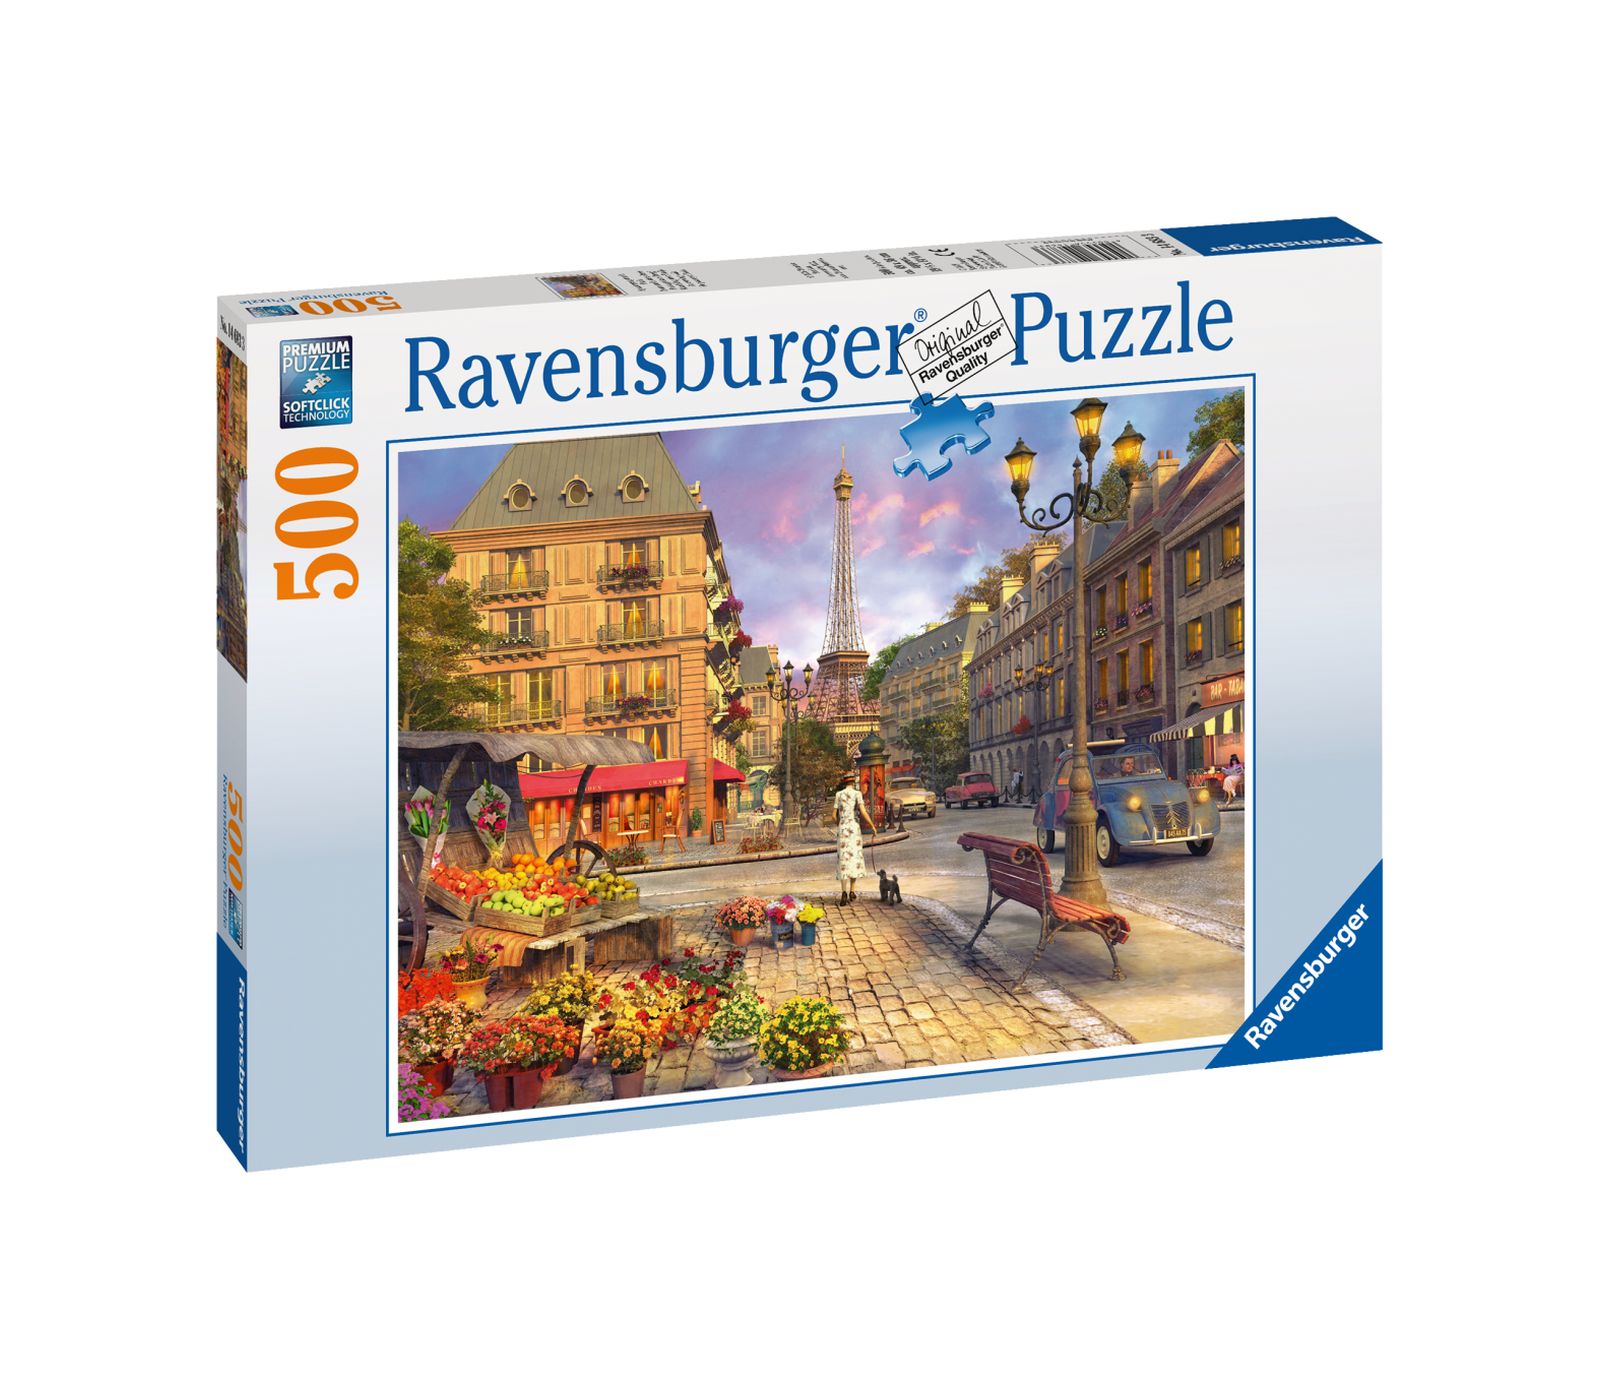 Ravensburger - puzzle 500 pezzi - passeggiata serale - RAVENSBURGER